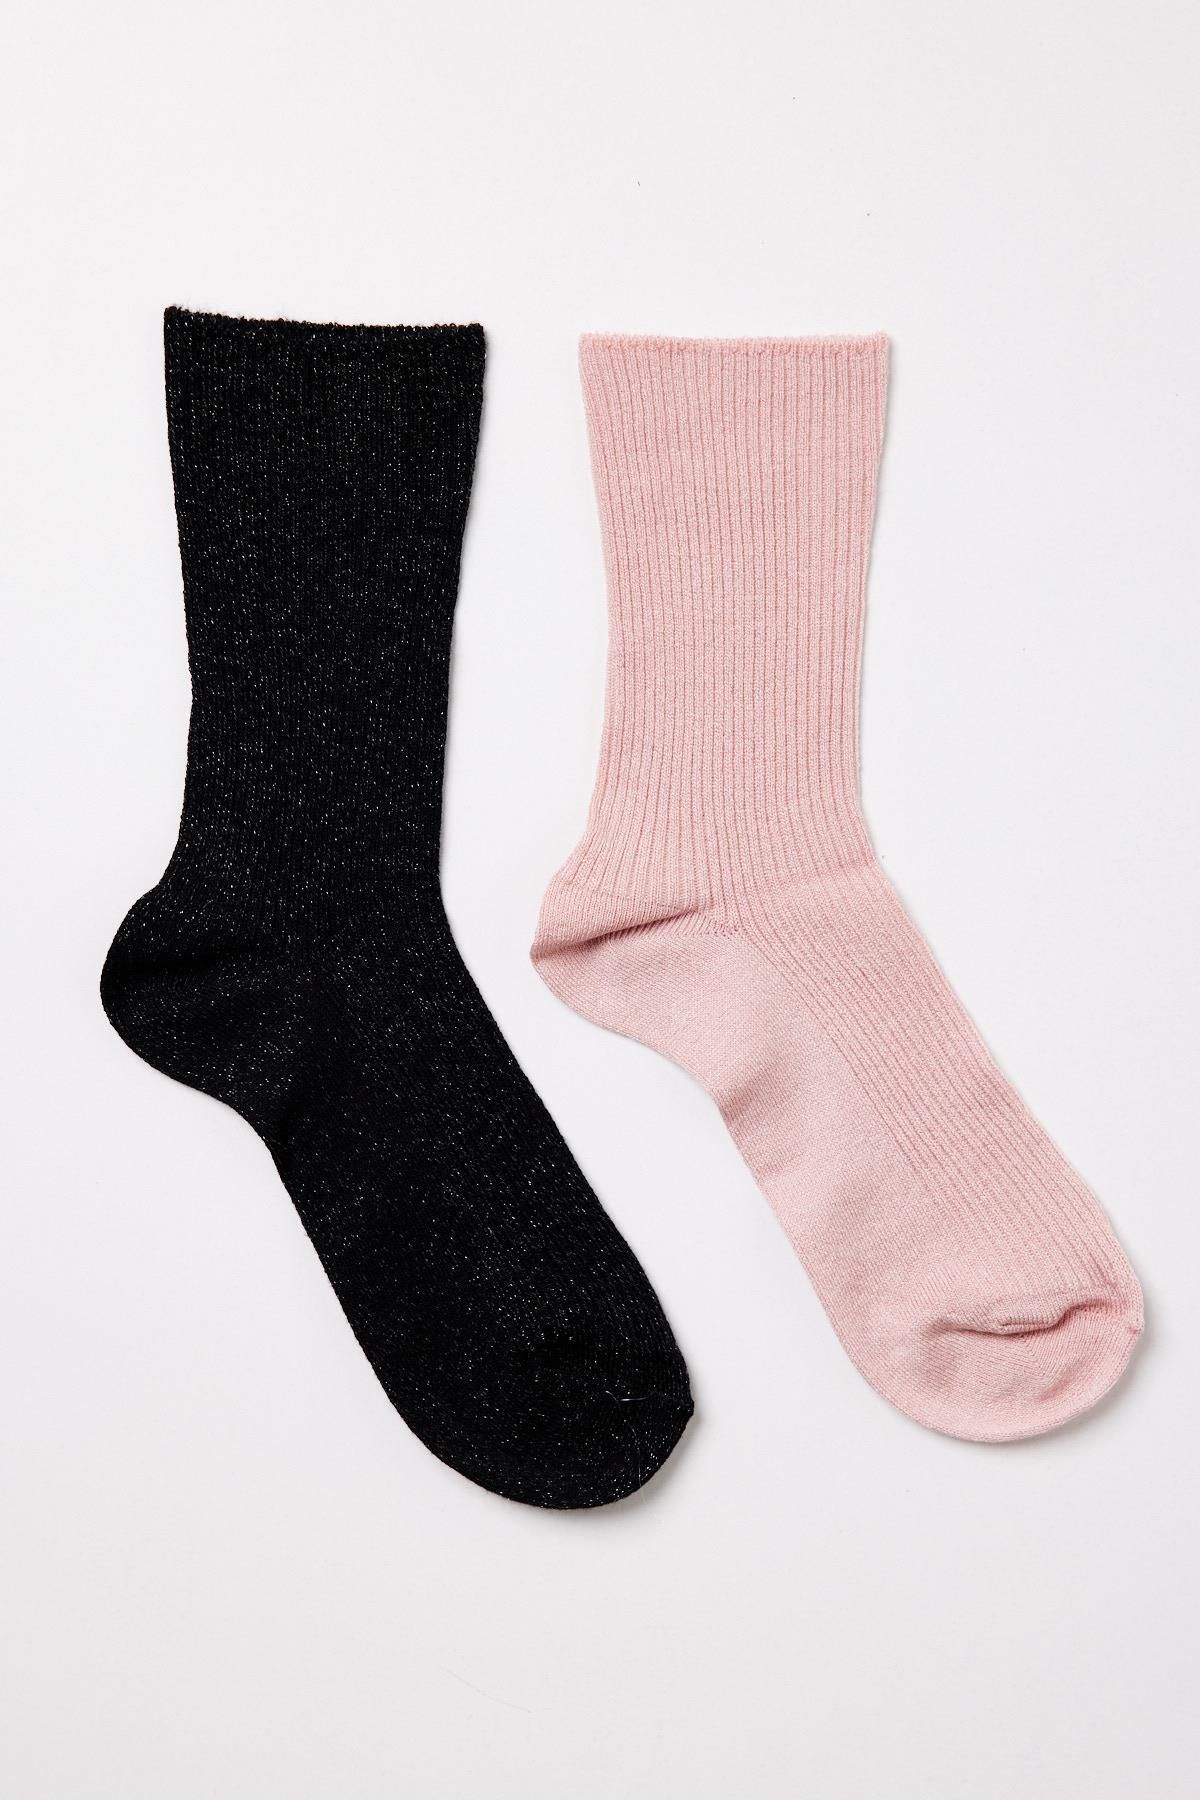 Katia & Bony 2'li Paket Kadın Viskon Soket Çorap Siyah/pembe